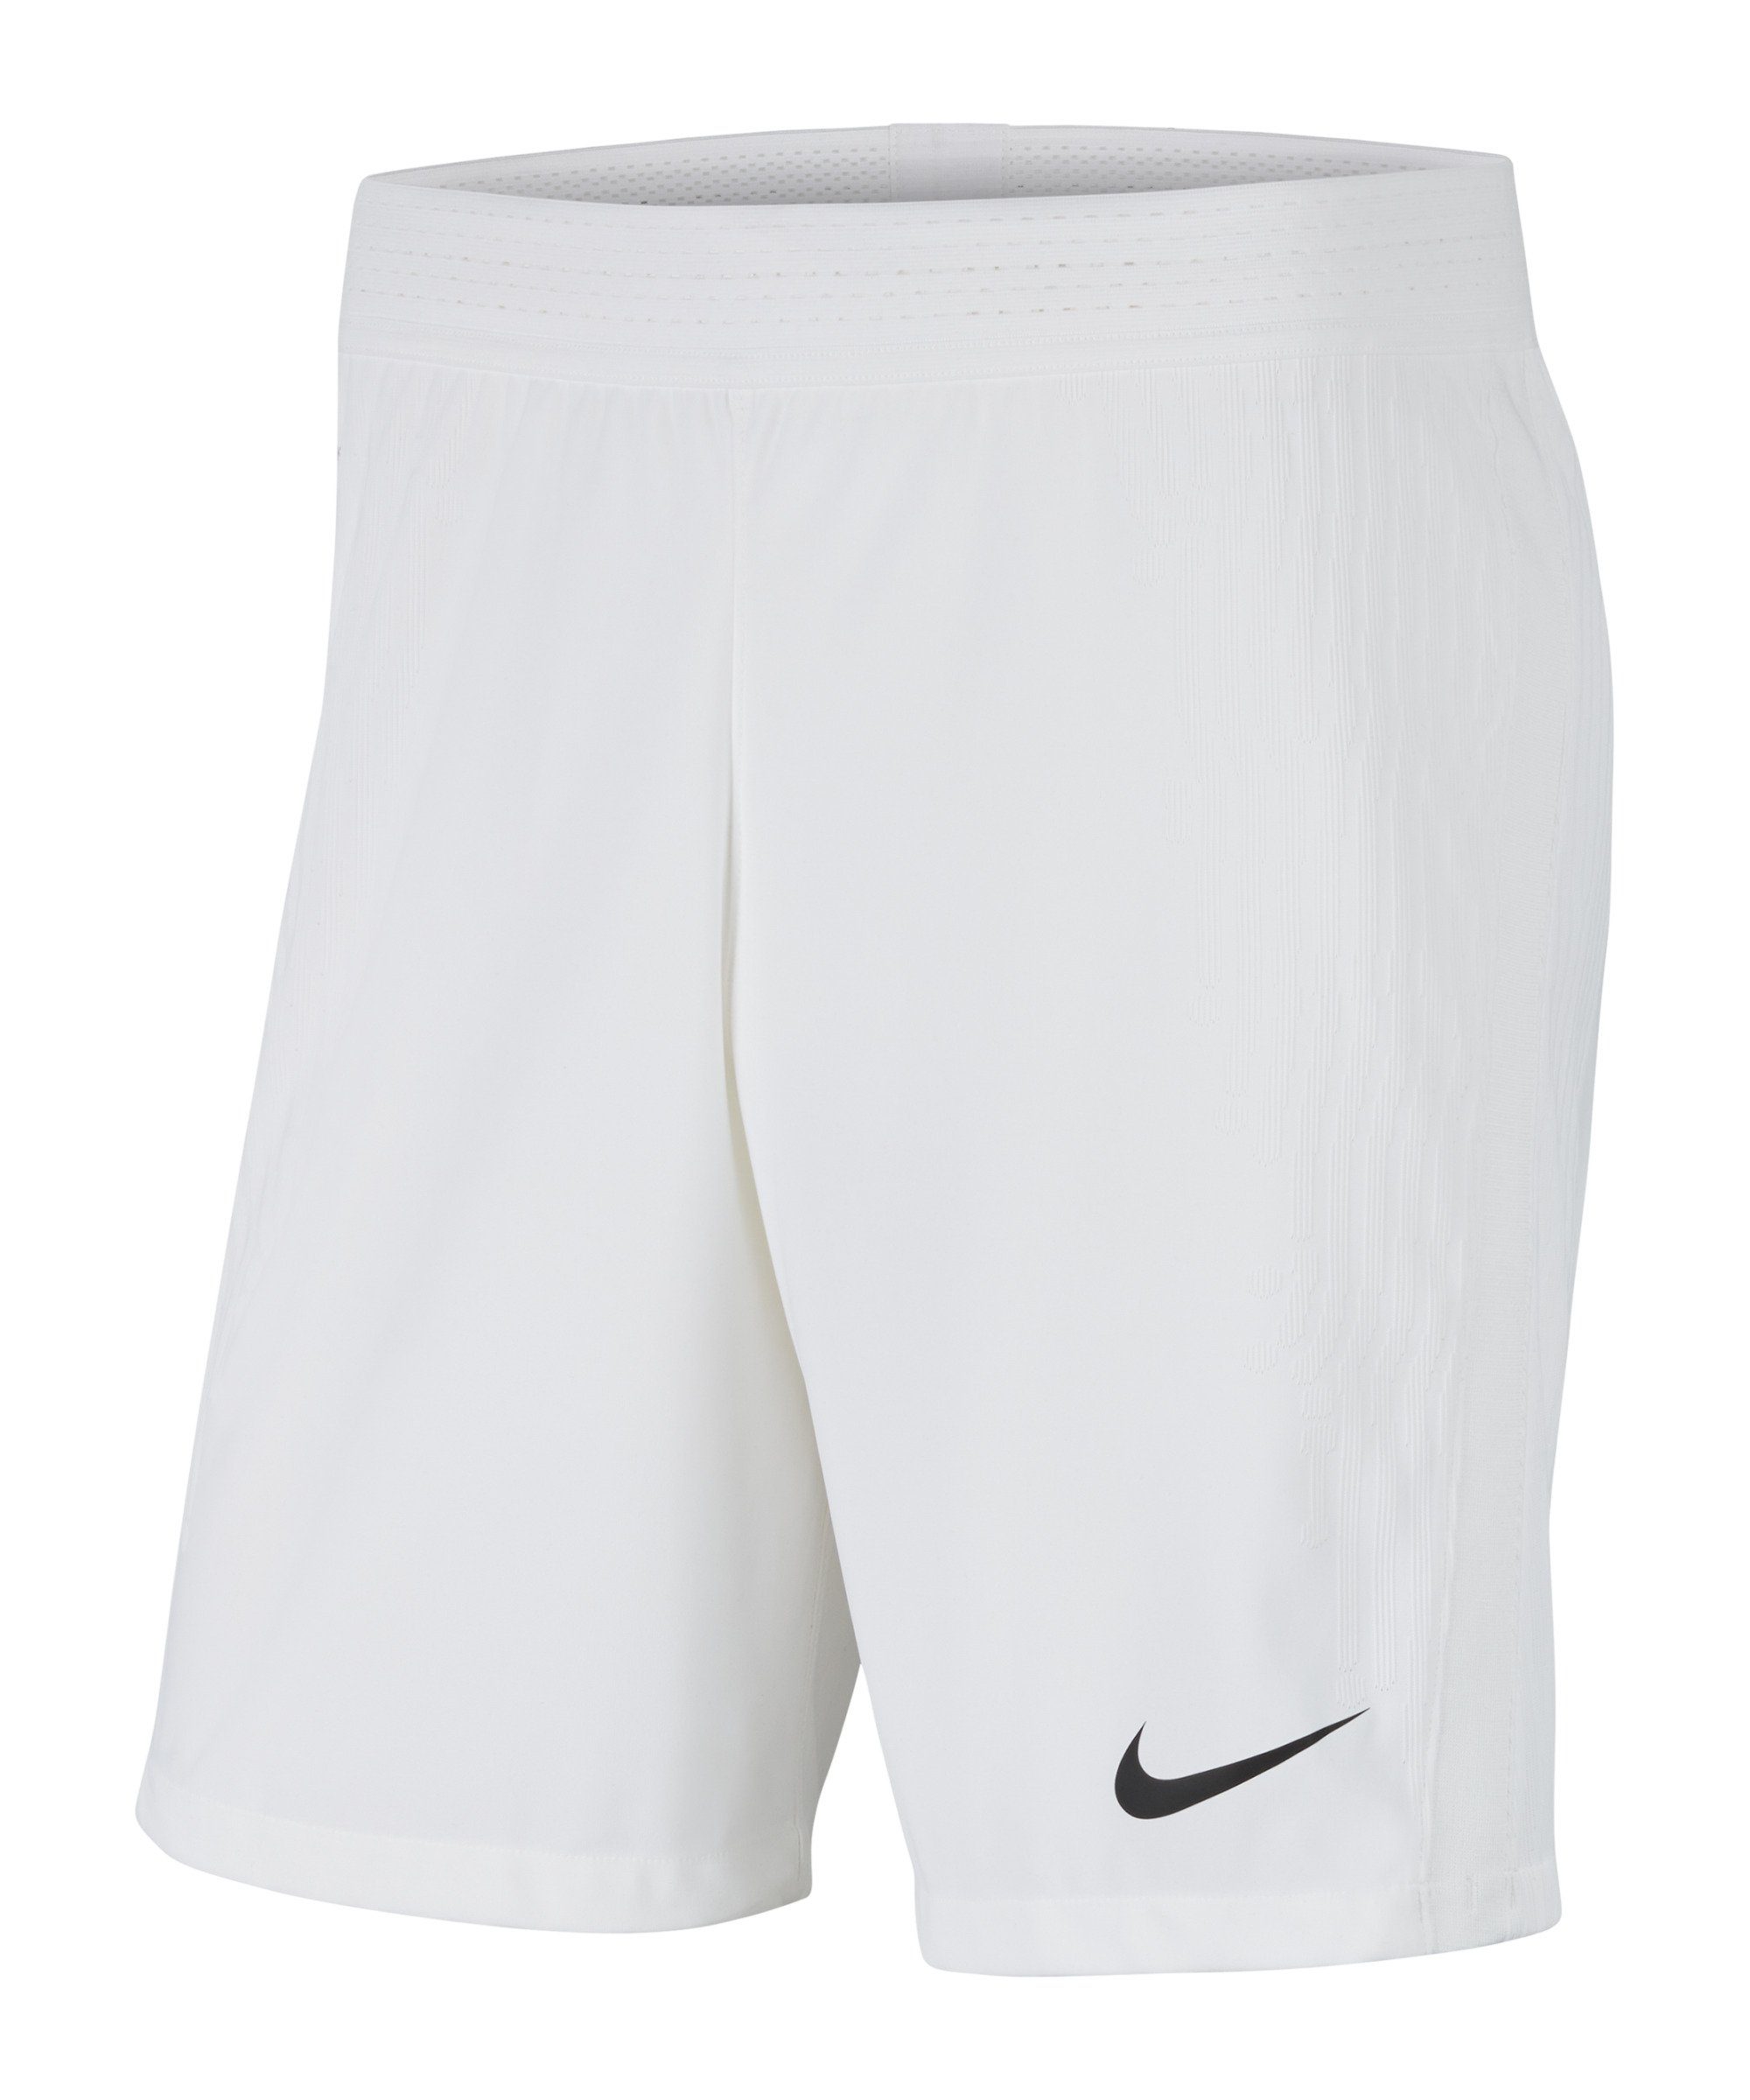 Nike Sporthose III Vapor weissschwarz Knit Short